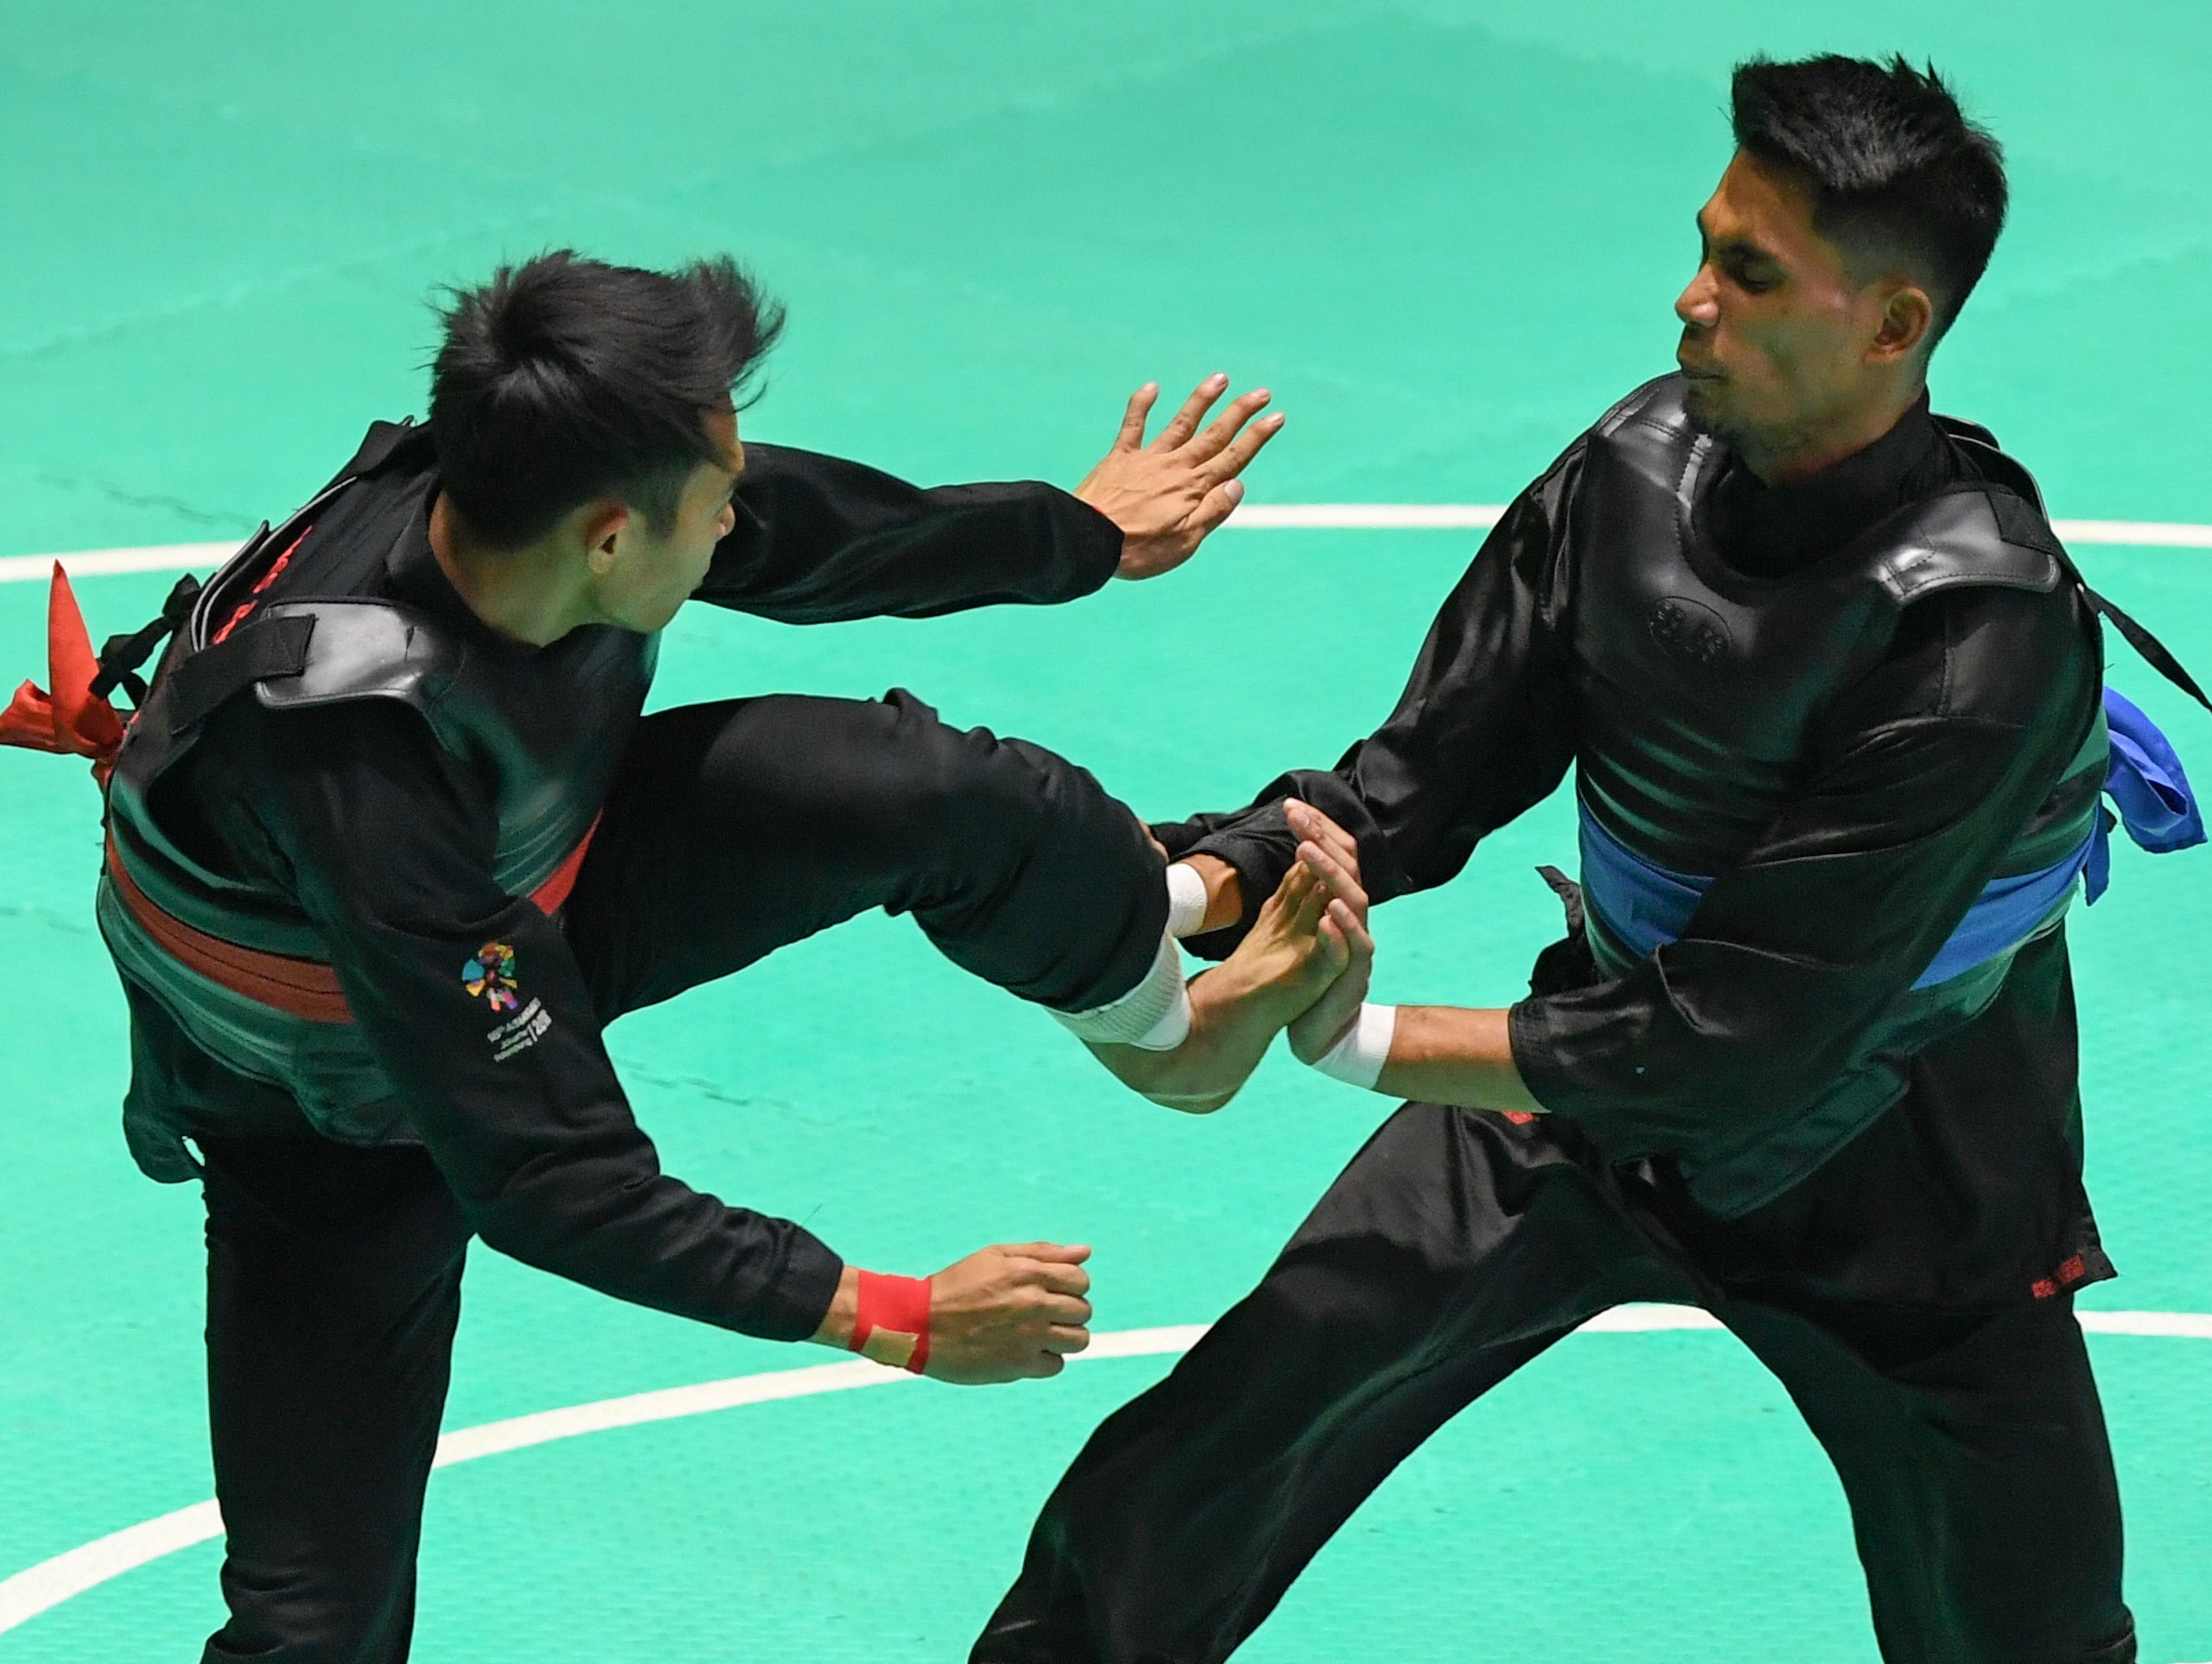 Action from the Pencak Silat at the Asian Games 2018 between Komang Harik Adi Putra (left) of Indonesia and Malaysia’s Mohd Al-Jufferi Jamari. Photo: Xinhua